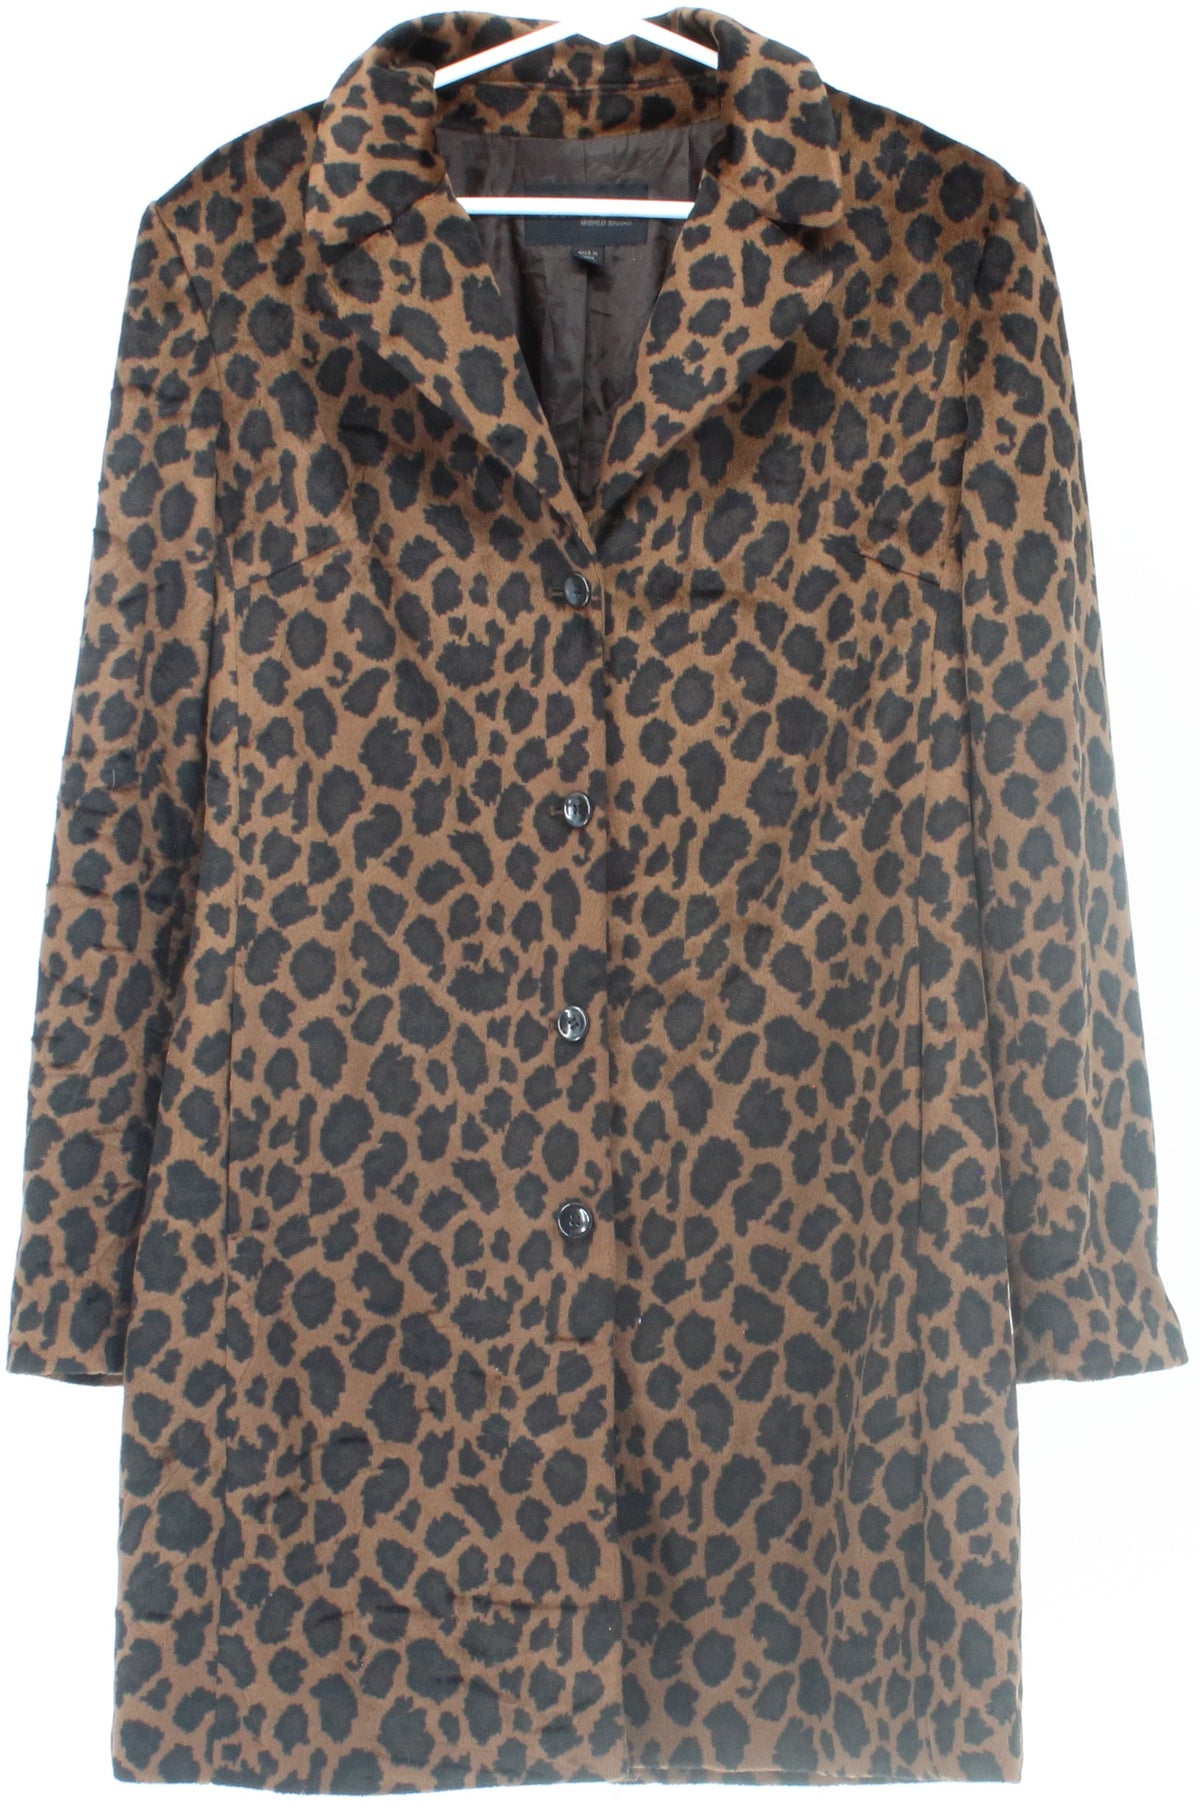 Express Leopard Print Women's Coat